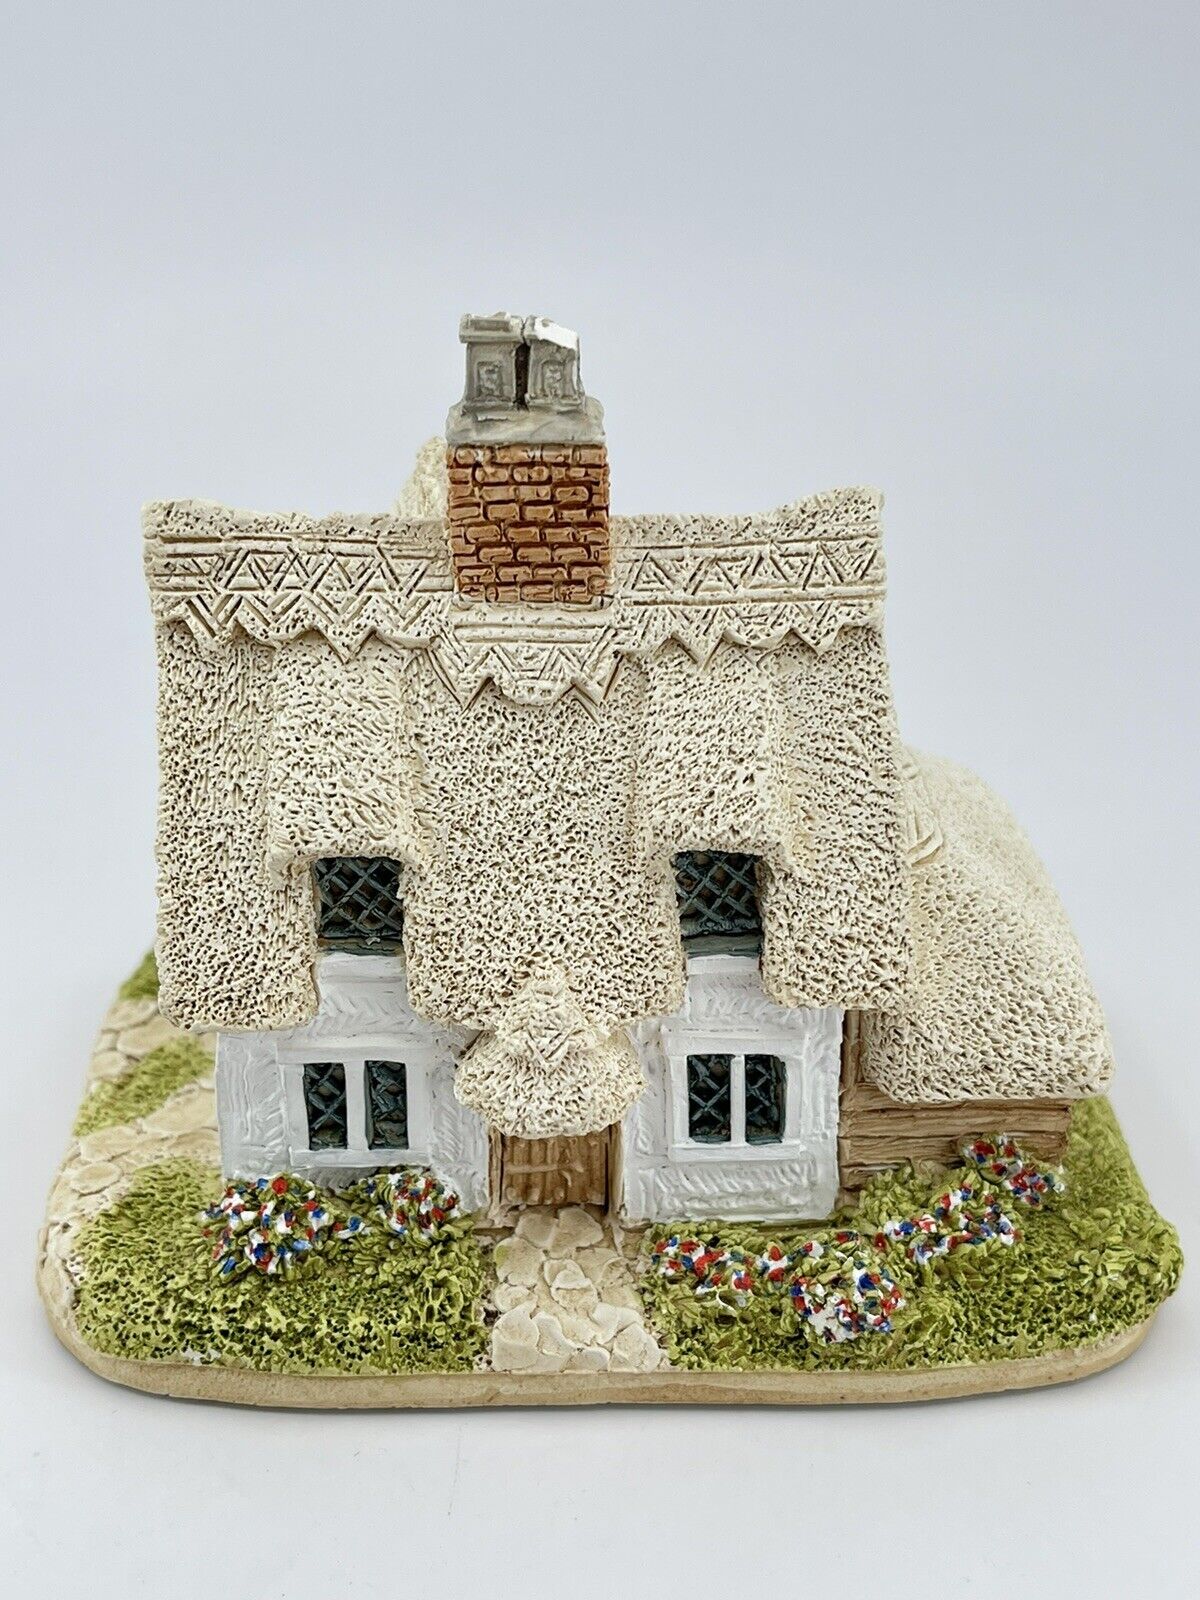 Vintage Lilliput Lane Clare Cottage United Kingdom handmade plaster thatched 3